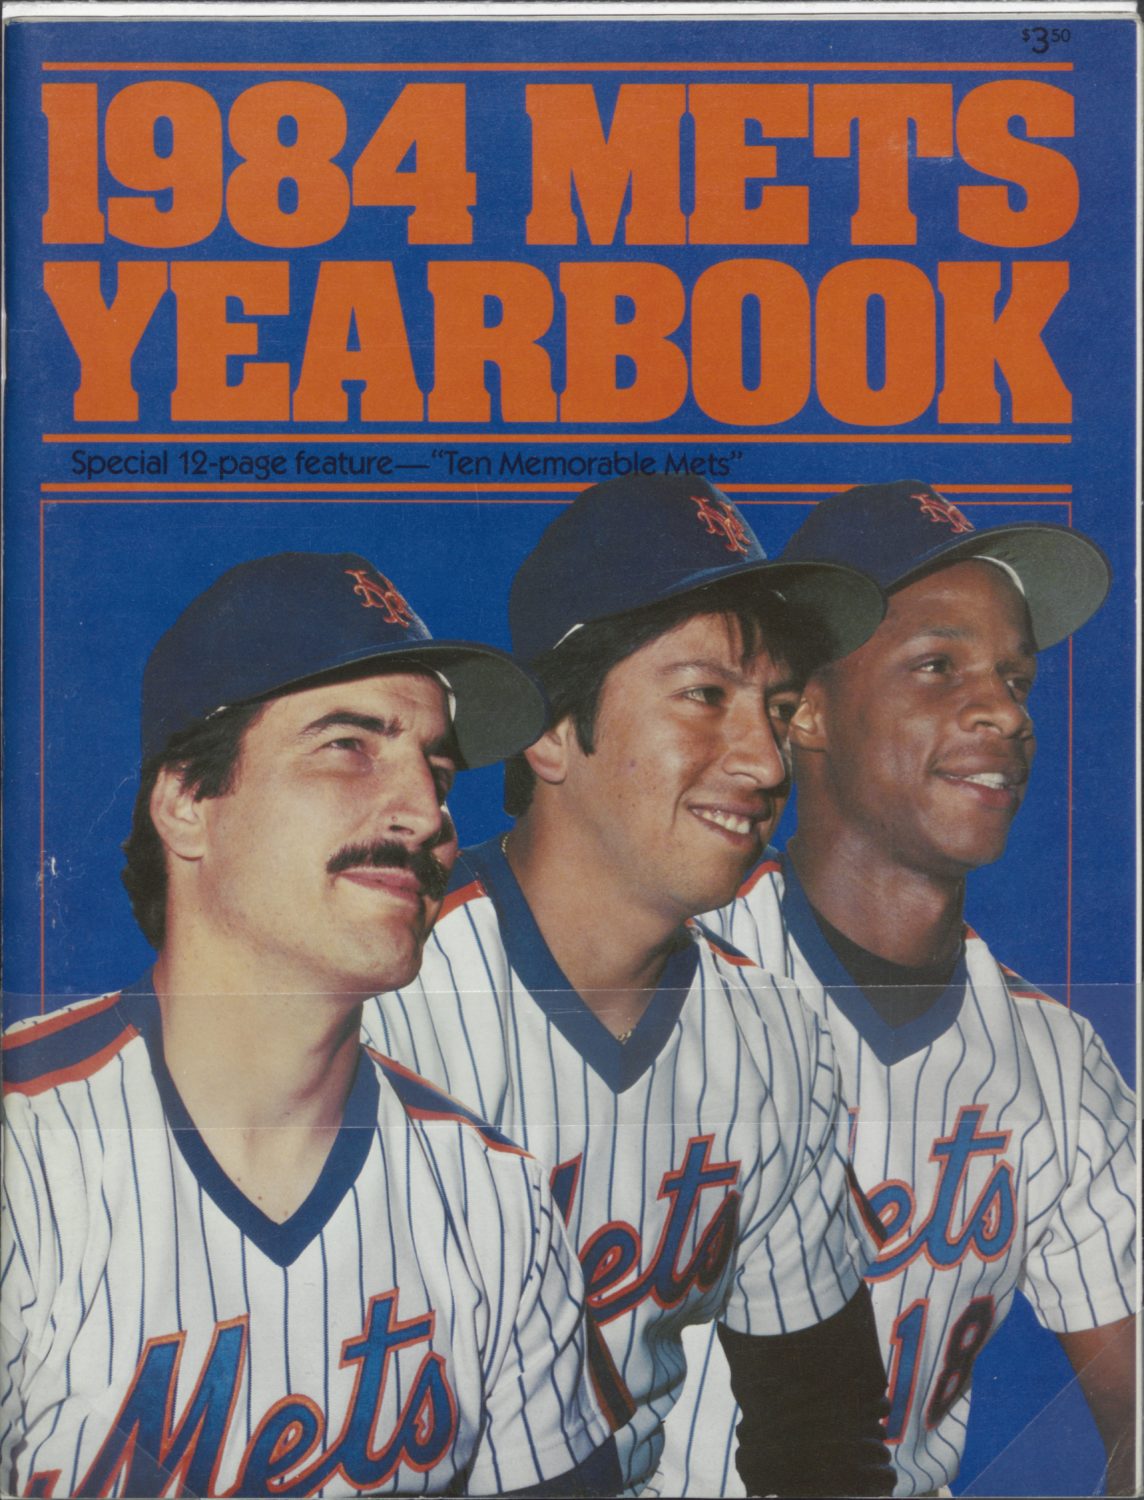 1984 Mets Yearbook: Rising Stars